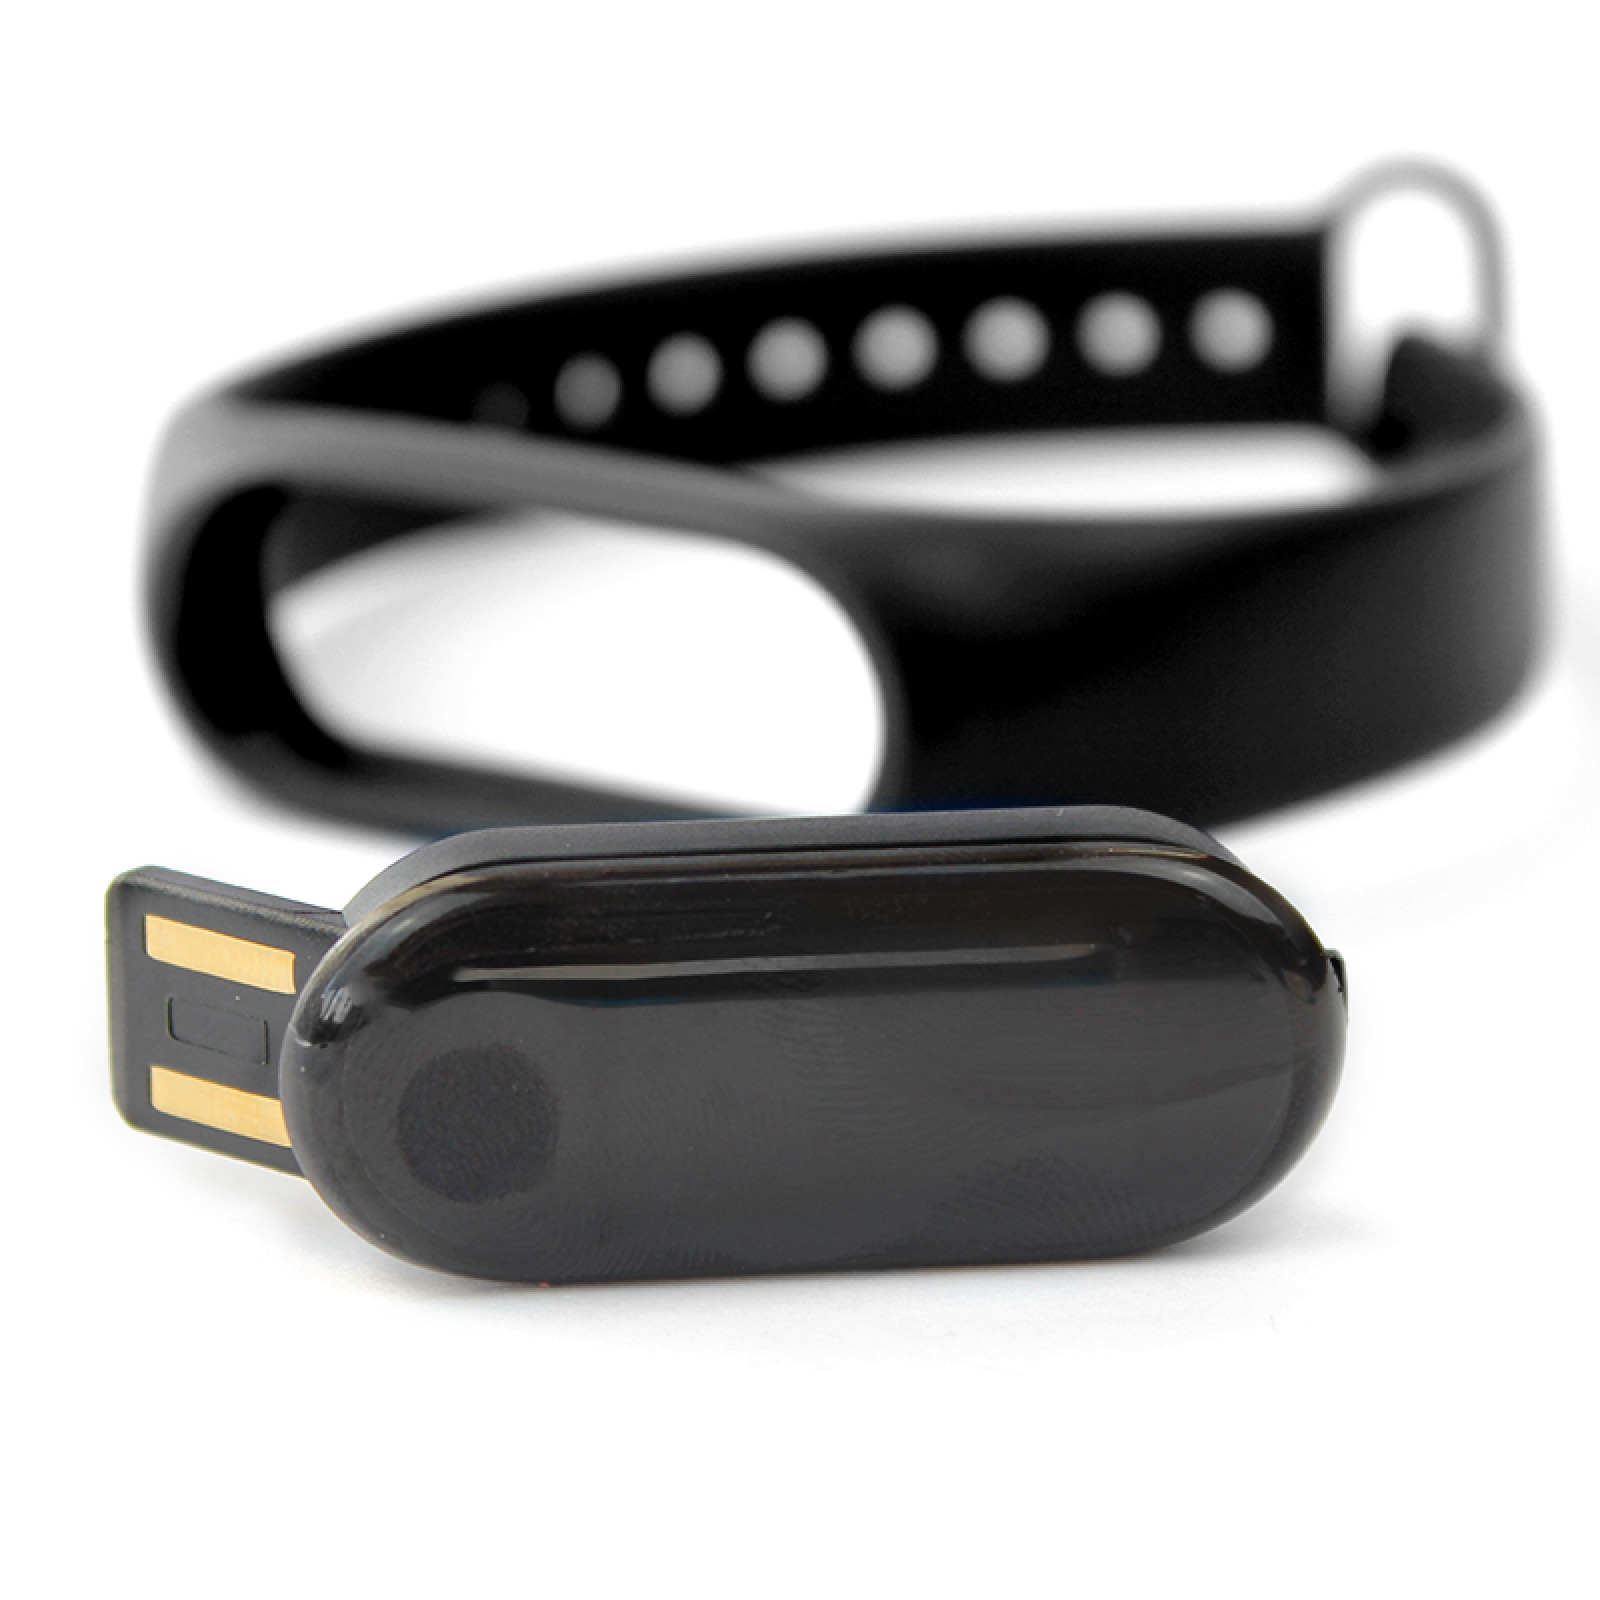 Фитнес браслет intelligence health bracelet M3 черный 149488